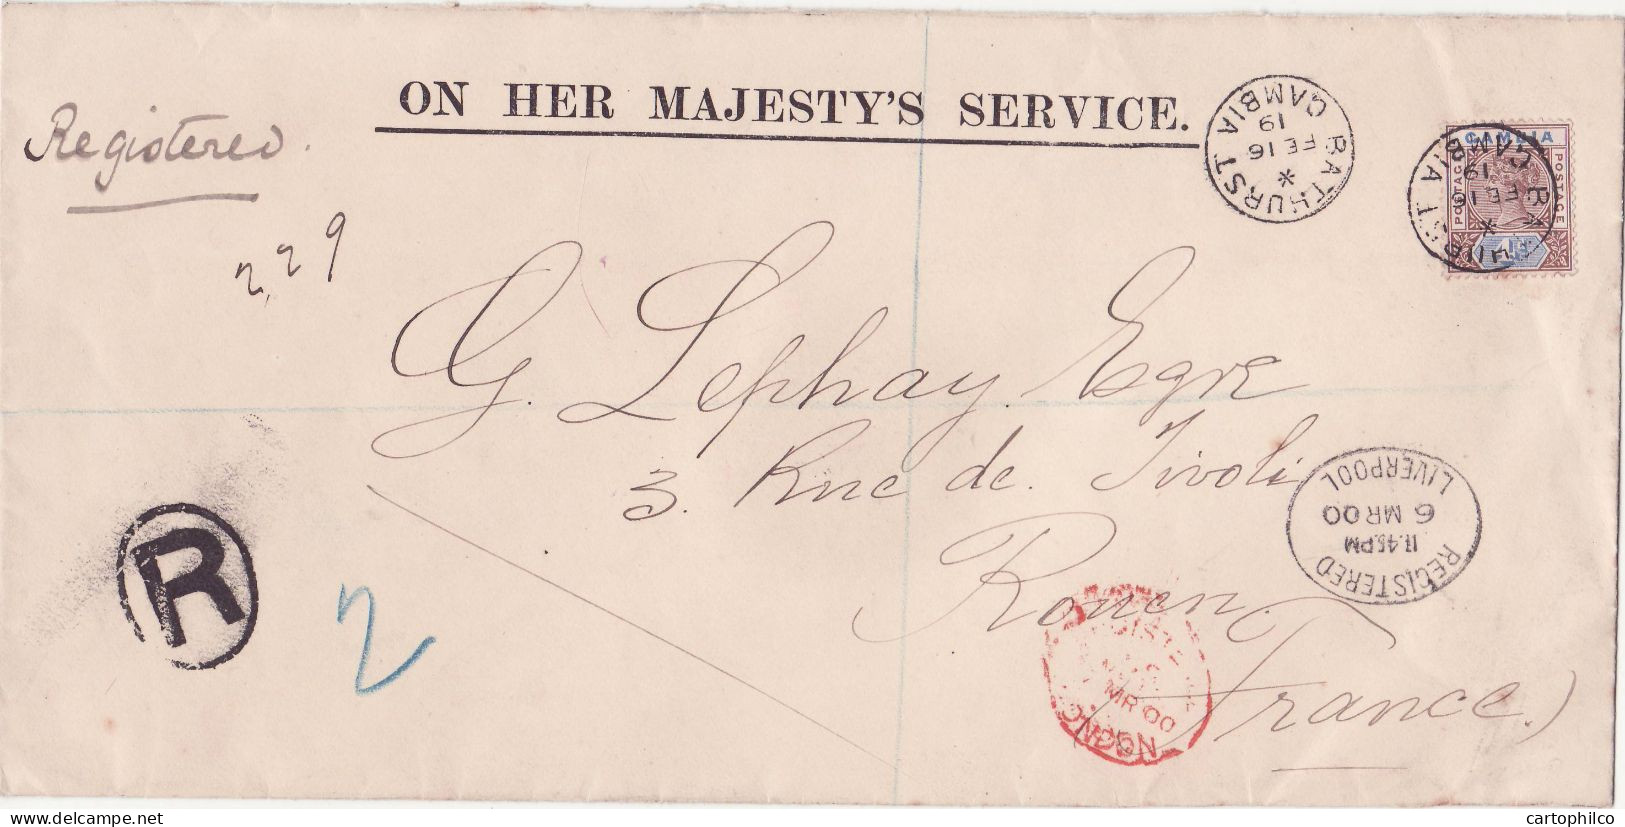 Gambia Registered Cover 4c Bathurst MAR 00 Error In Cachet 1919 For Lephay Rouen France - Gambie (...-1964)